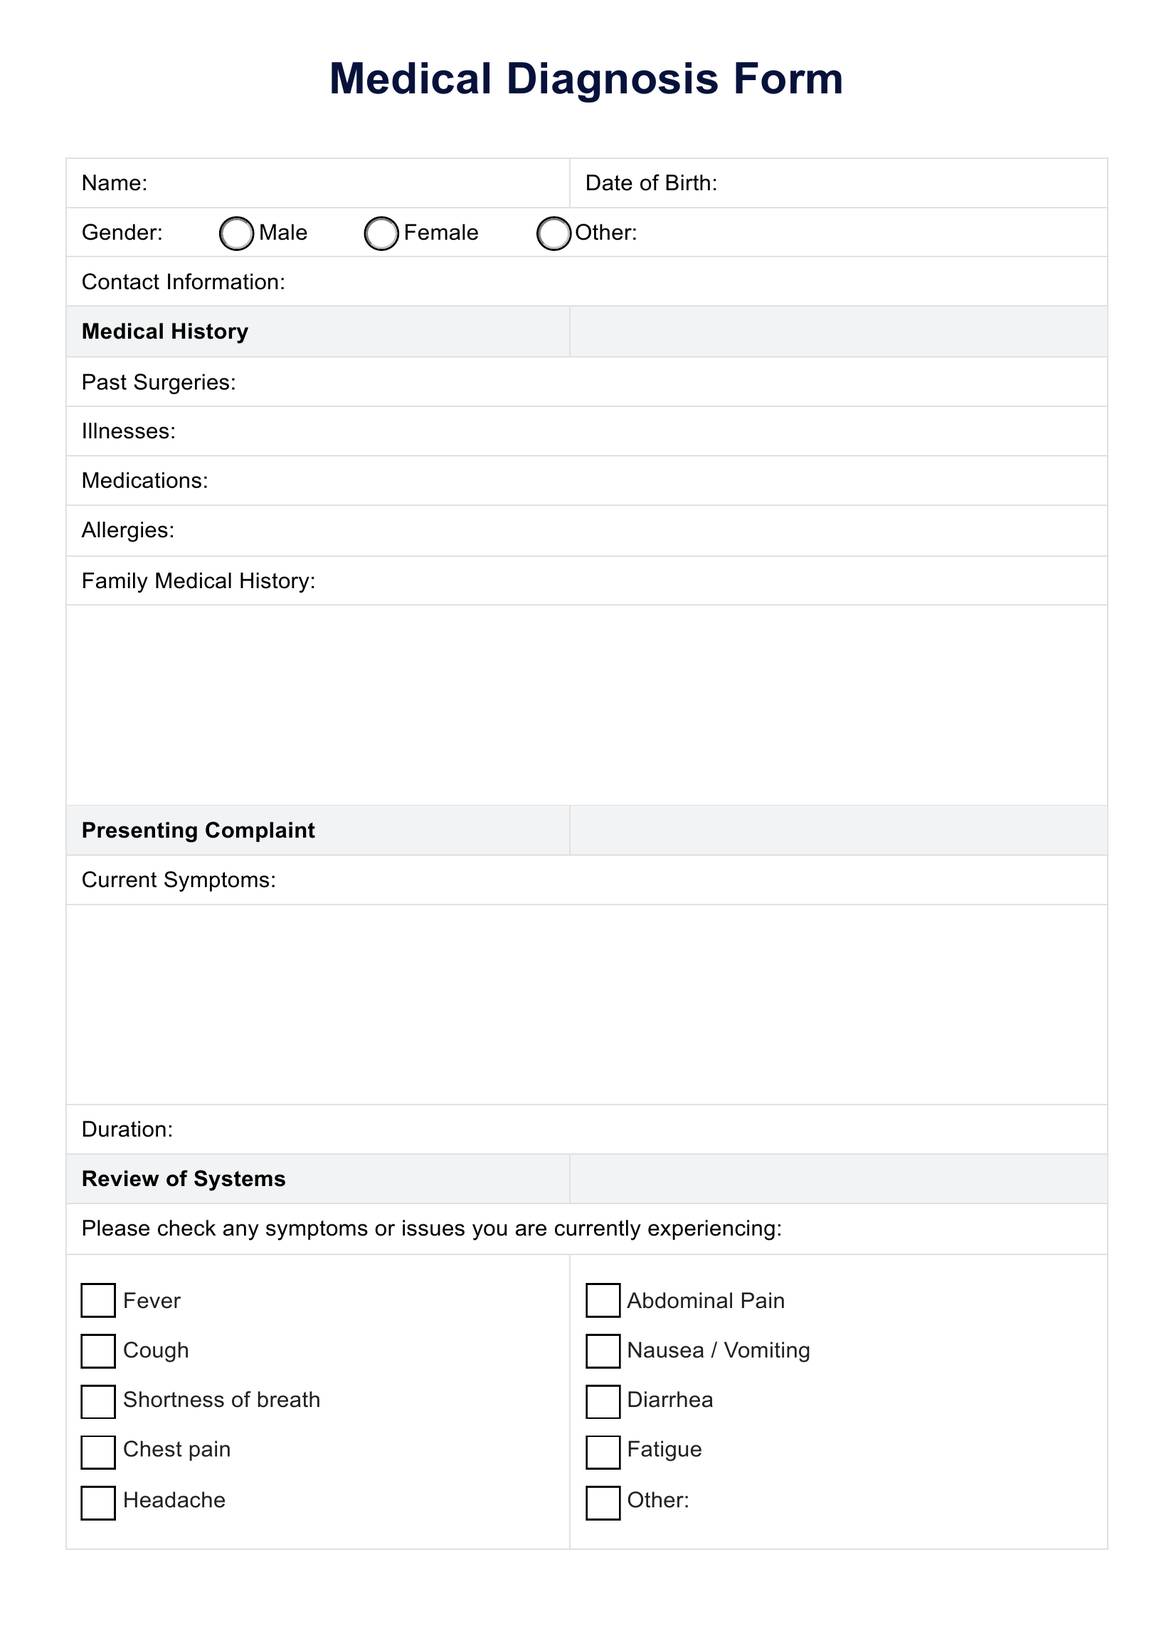 Medical Diagnosis Form PDF Example